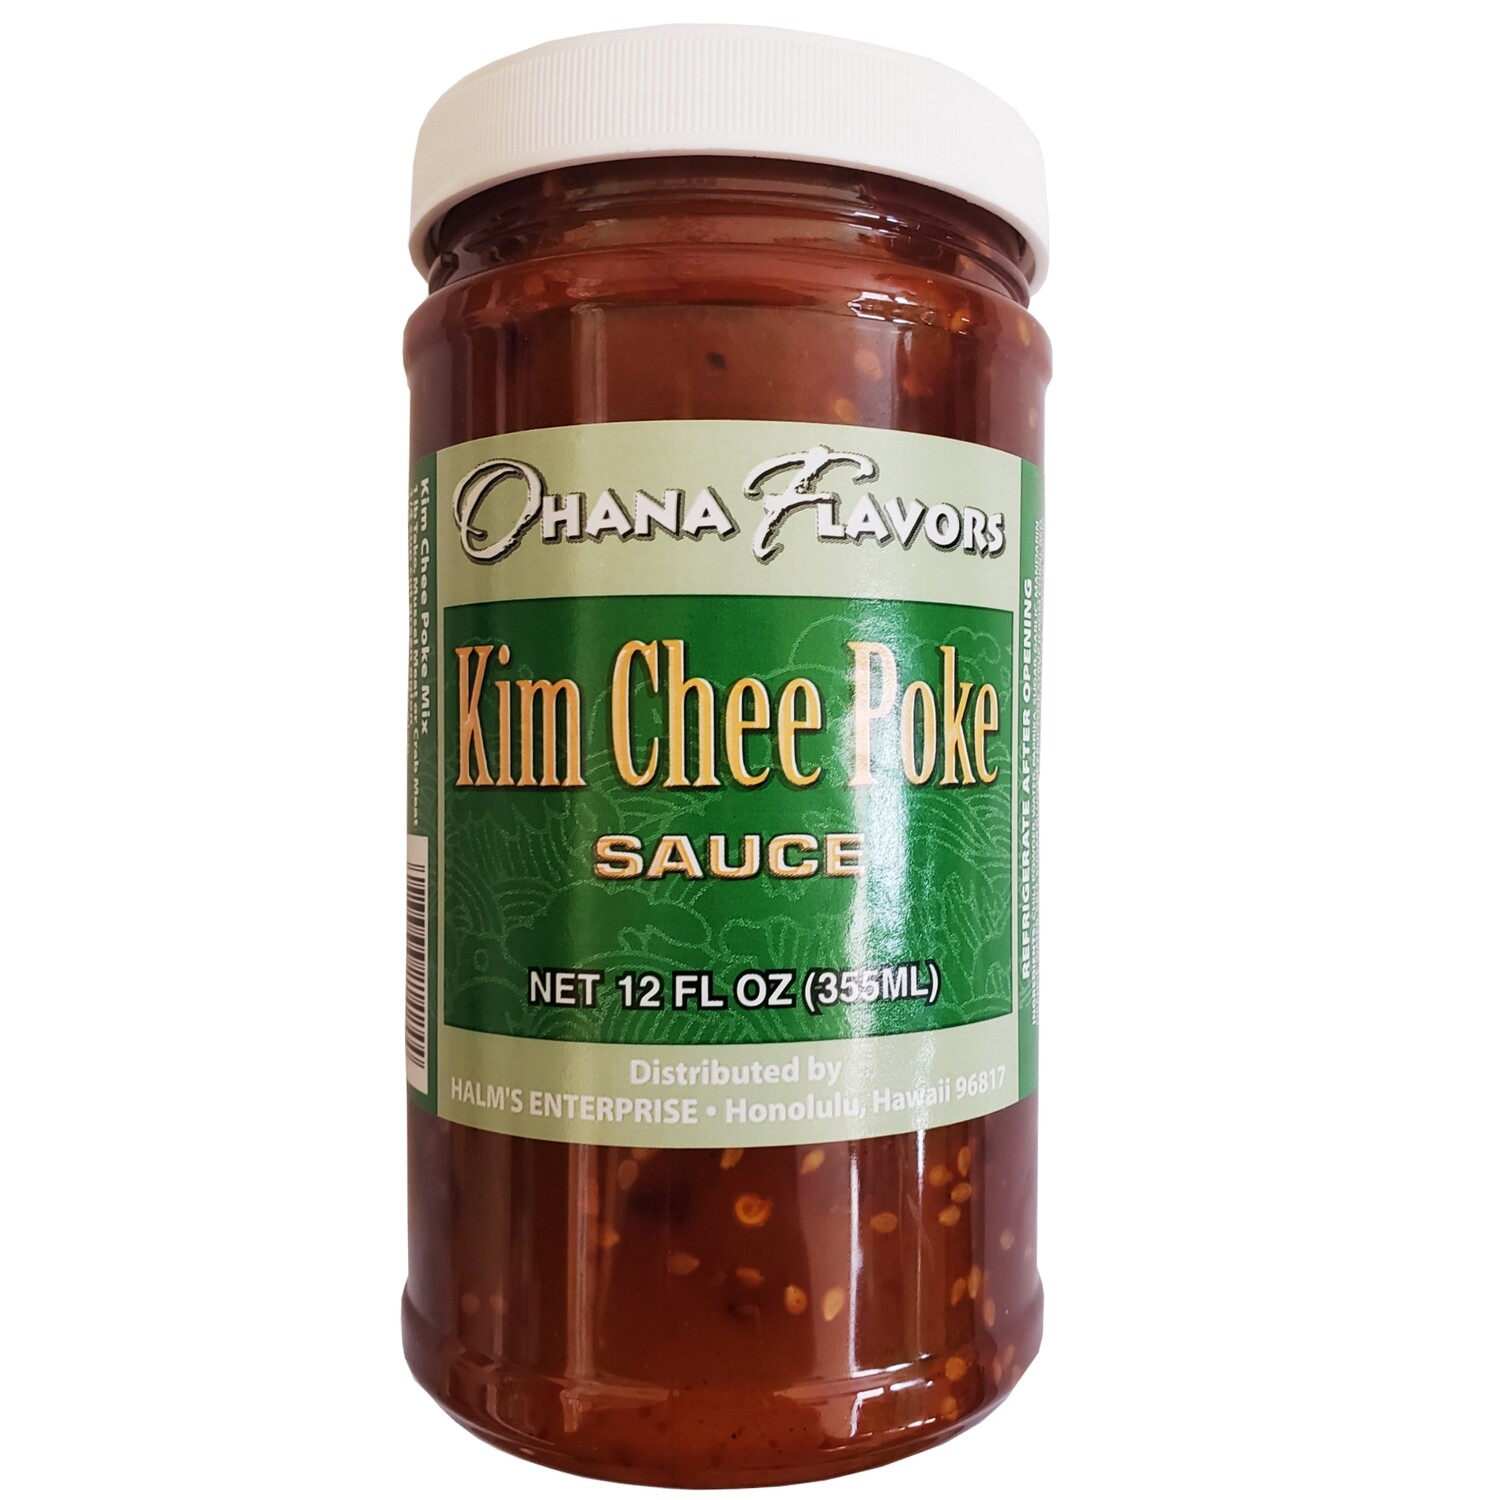 Ohana Flavors Kim Chee Poke Sauce 12oz